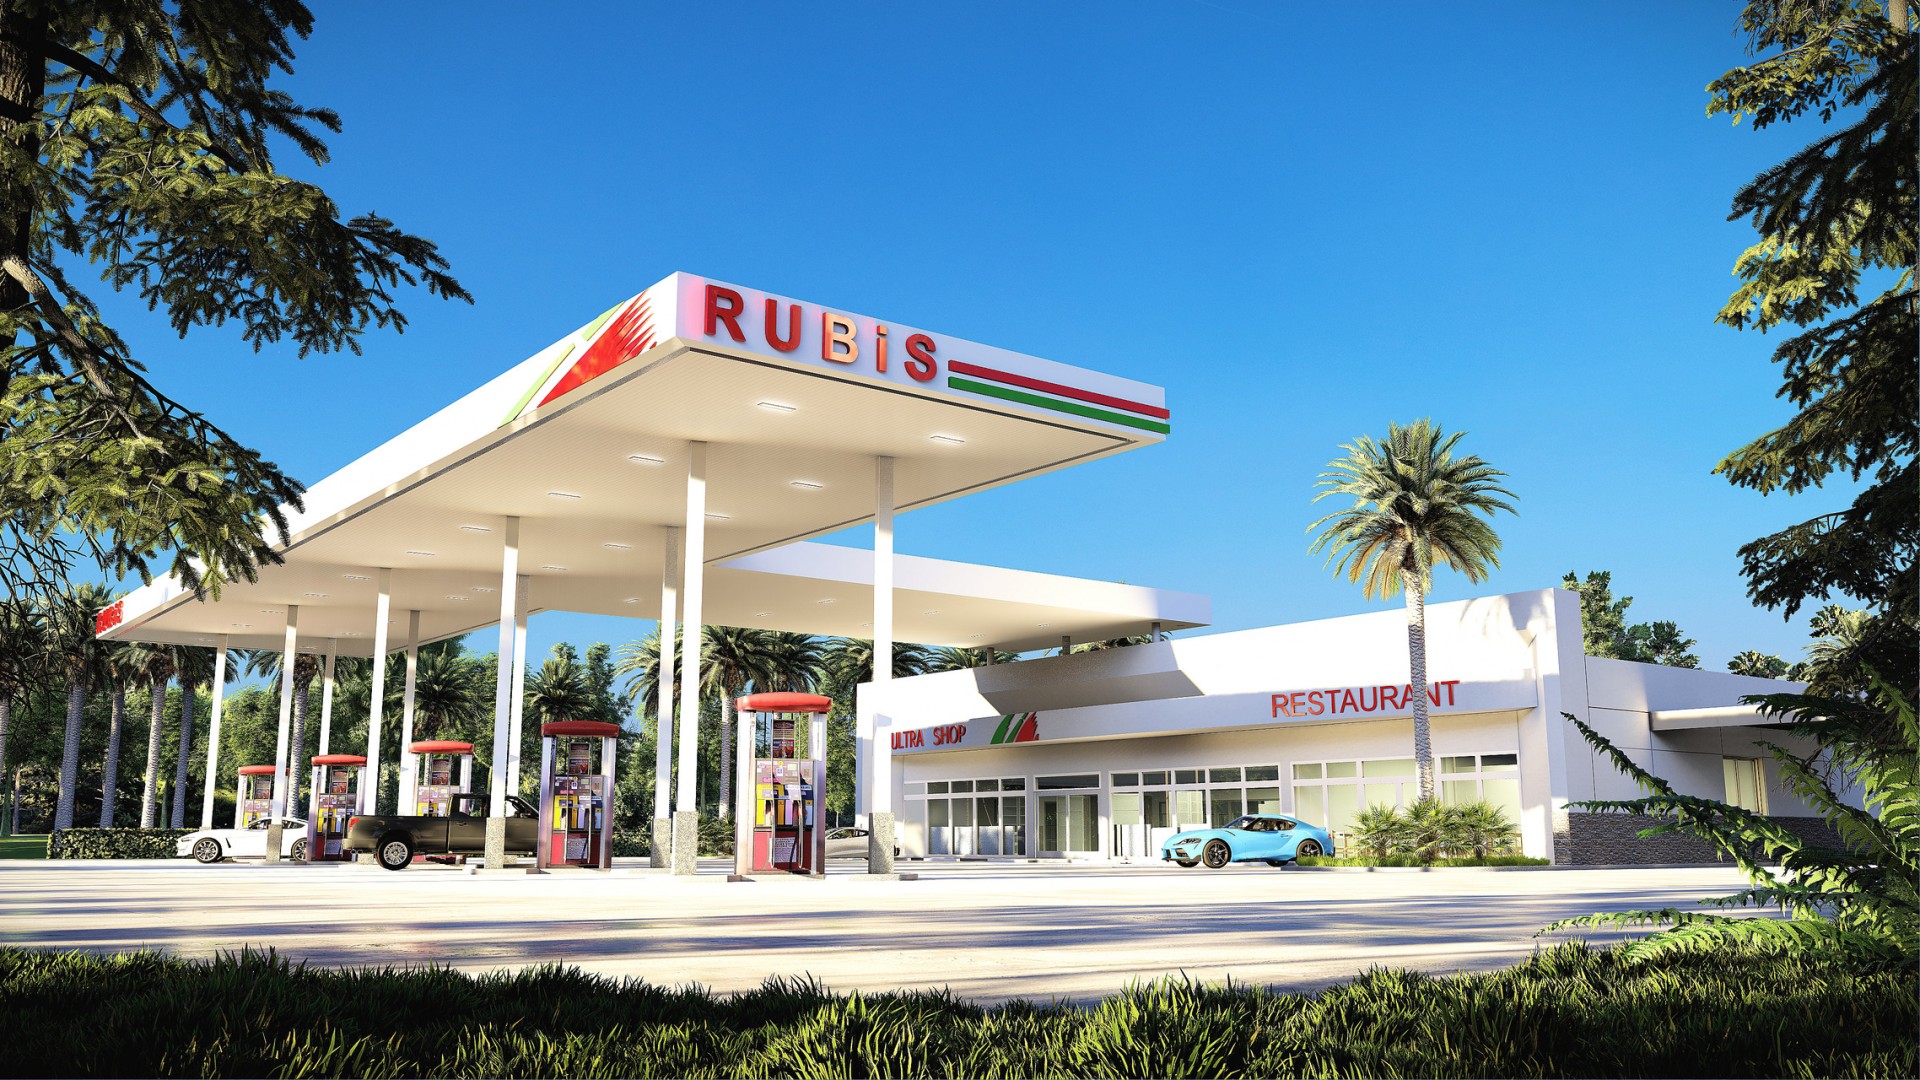 Rubis Gas Station